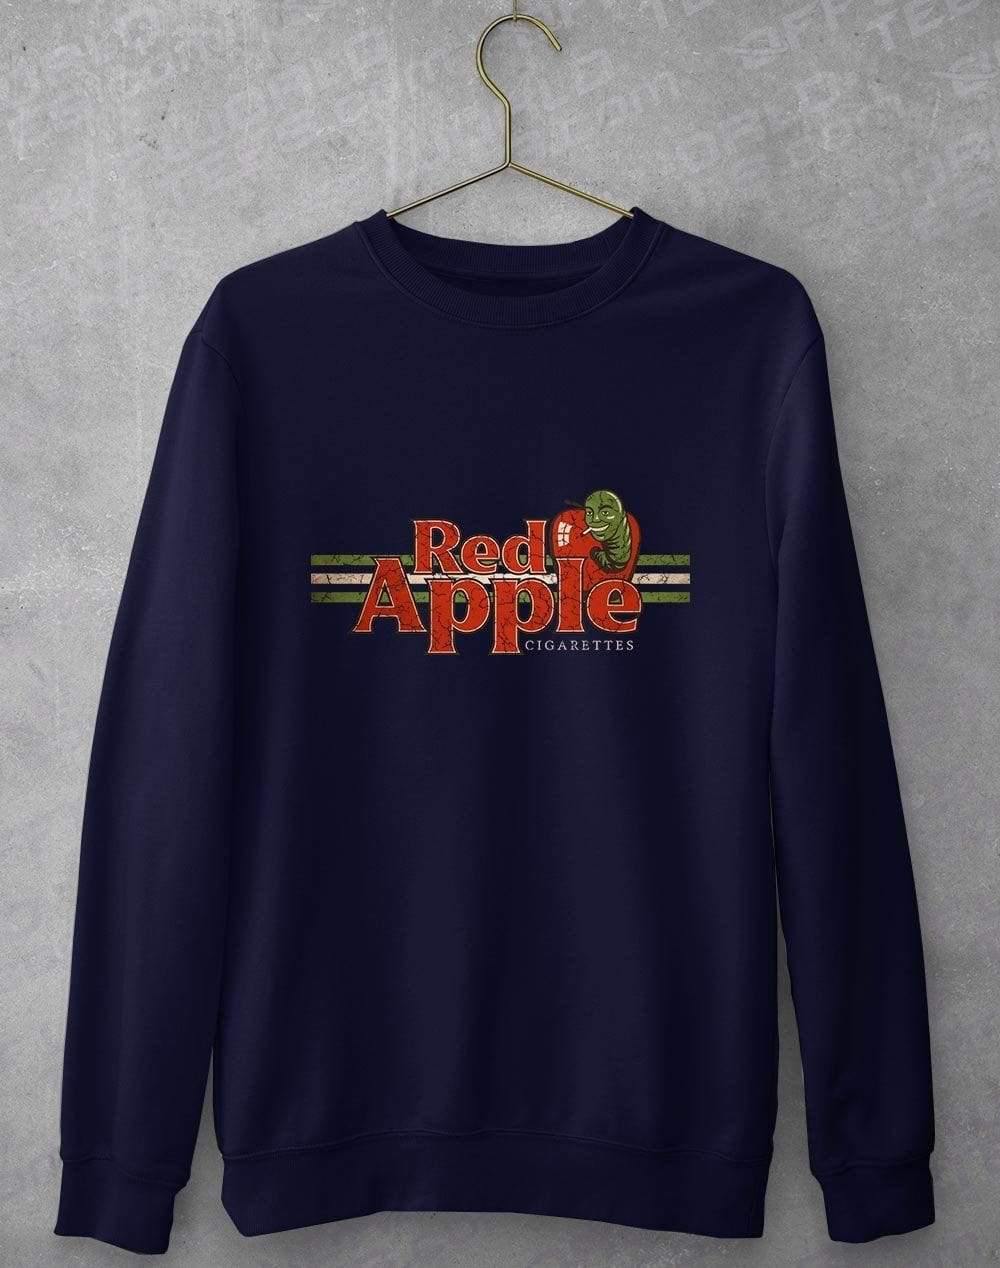 Red Apple Cigarettes Sweatshirt S / Navy  - Off World Tees